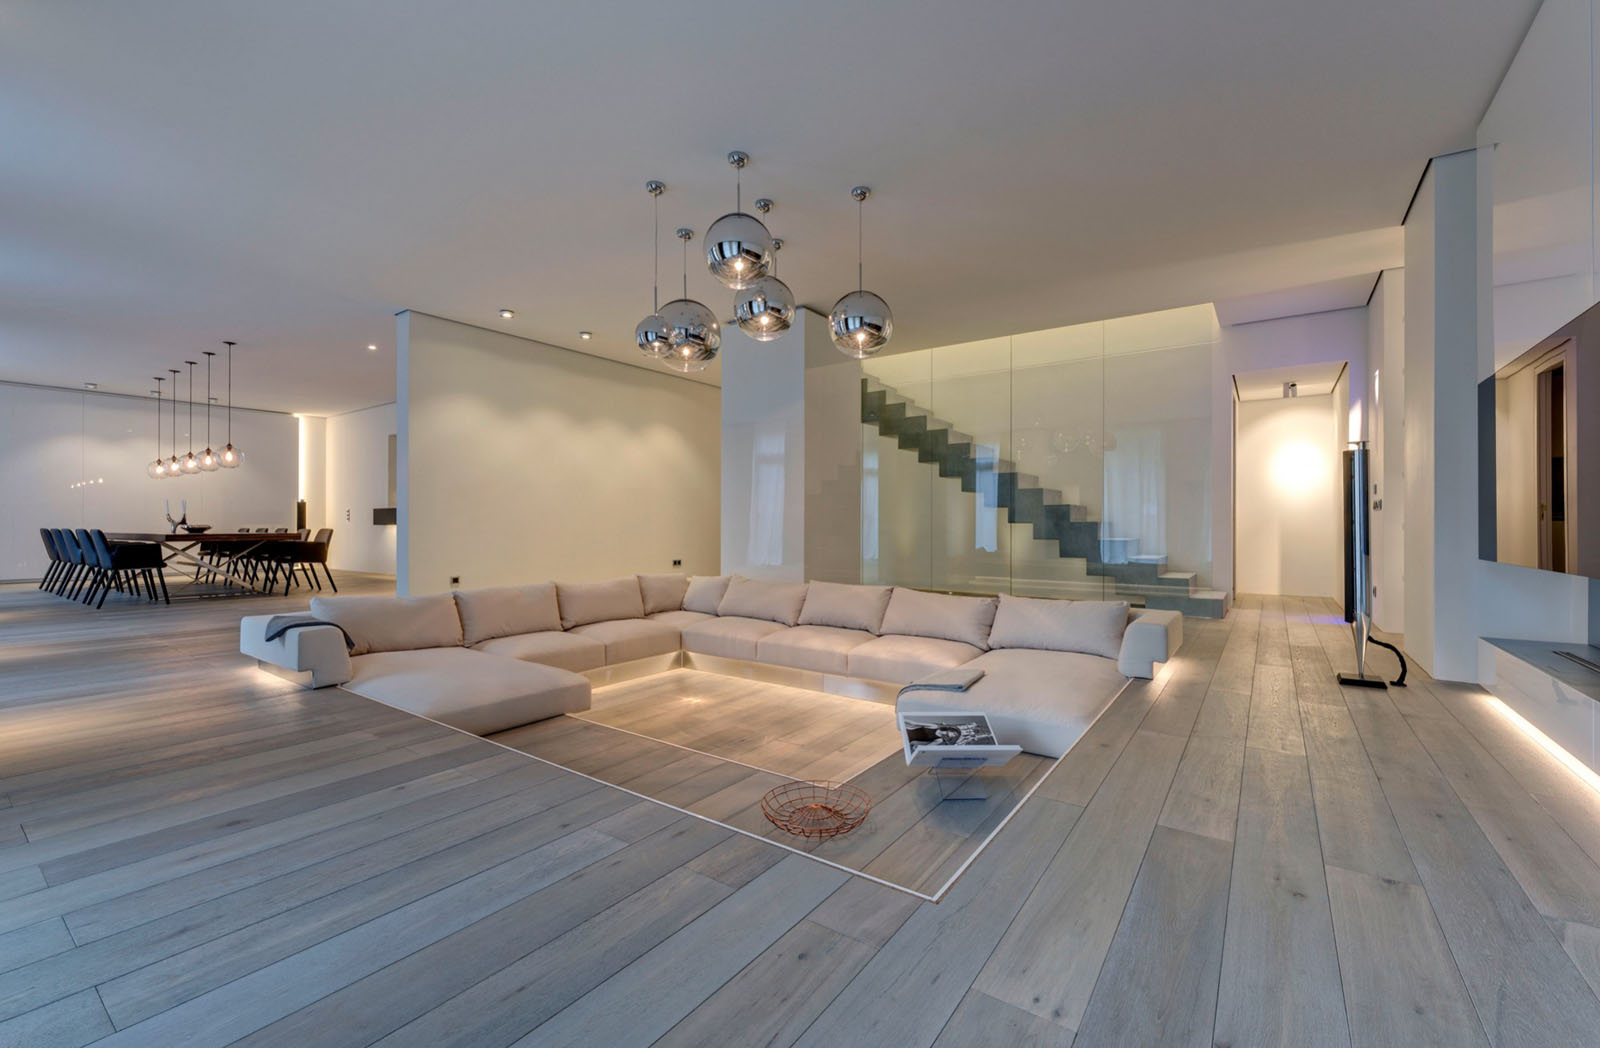 Apartment Interior Design: Creating The Perfect Home